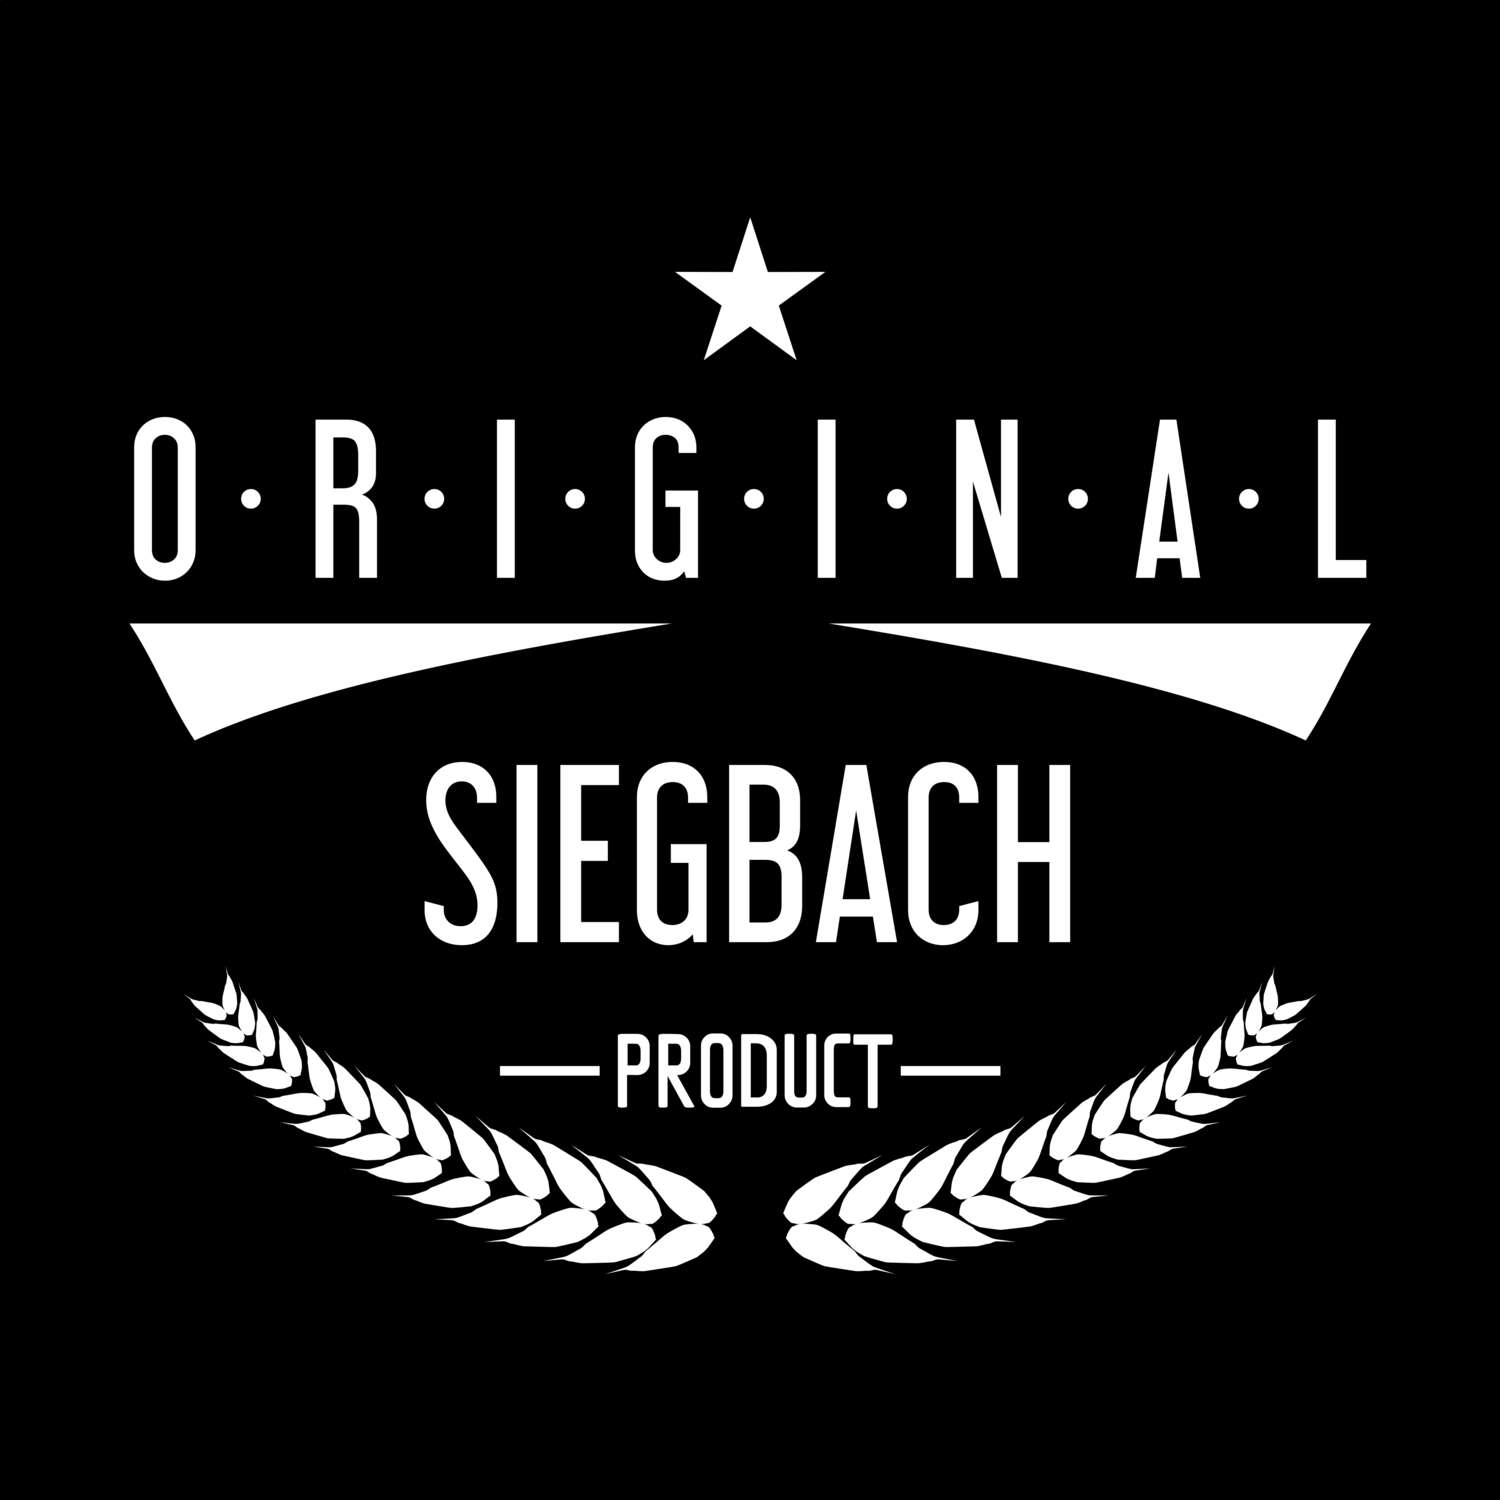 Siegbach T-Shirt »Original Product«